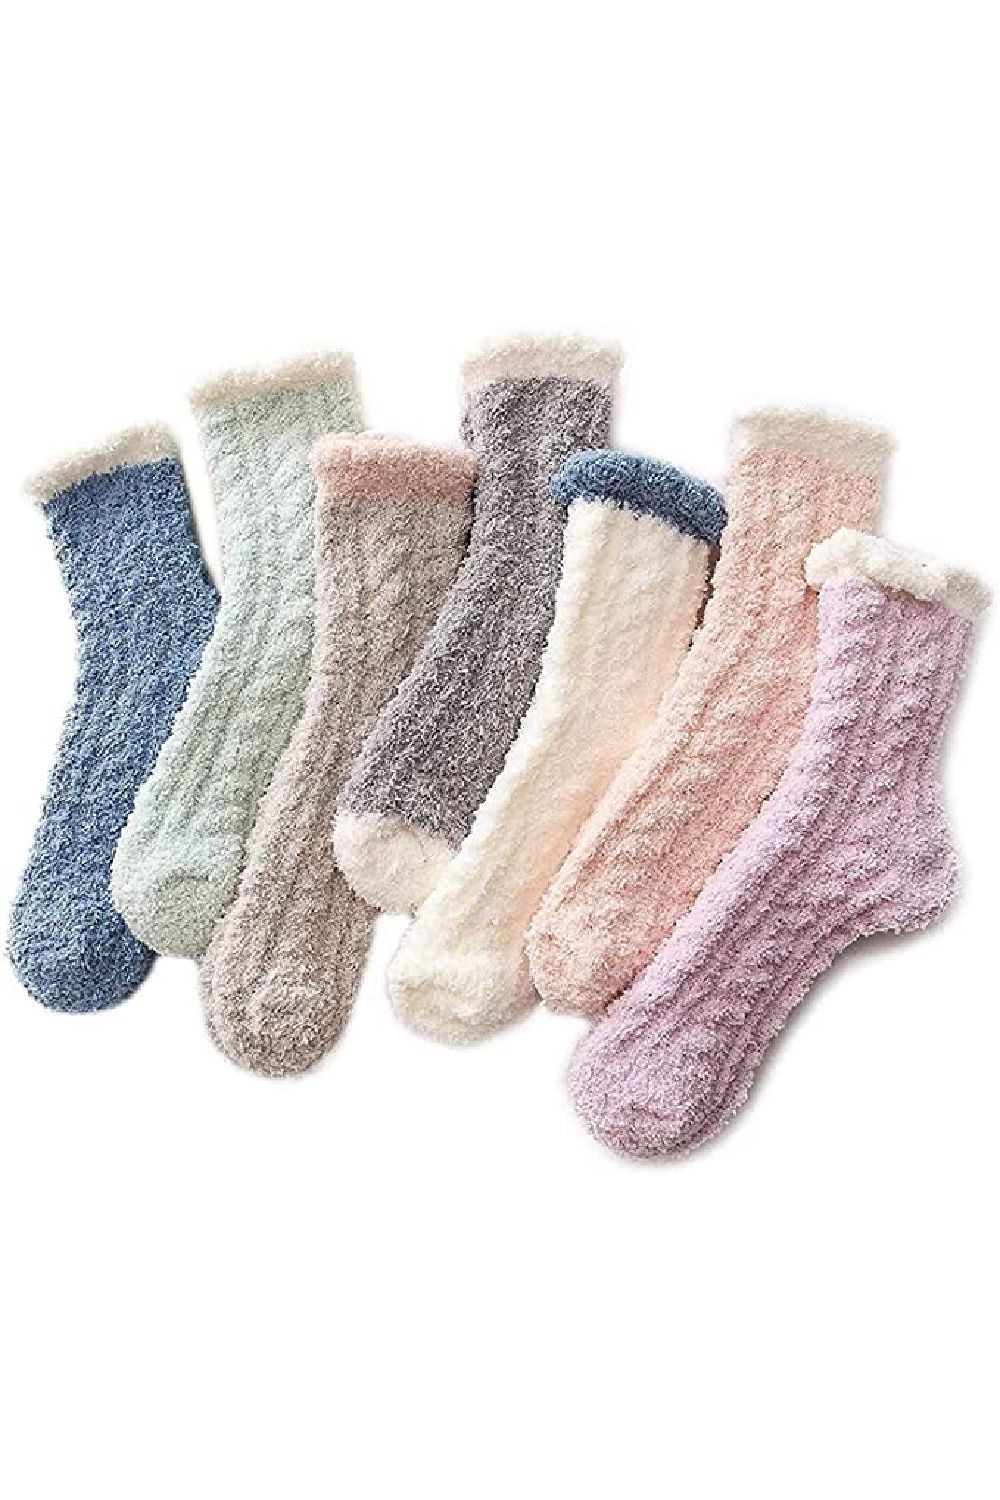 Hopwin Women Warm Winter Floor Socks Girl Super Soft Fluffy Crew Sock Cozy Anti Slip Casual Fleece Socks 